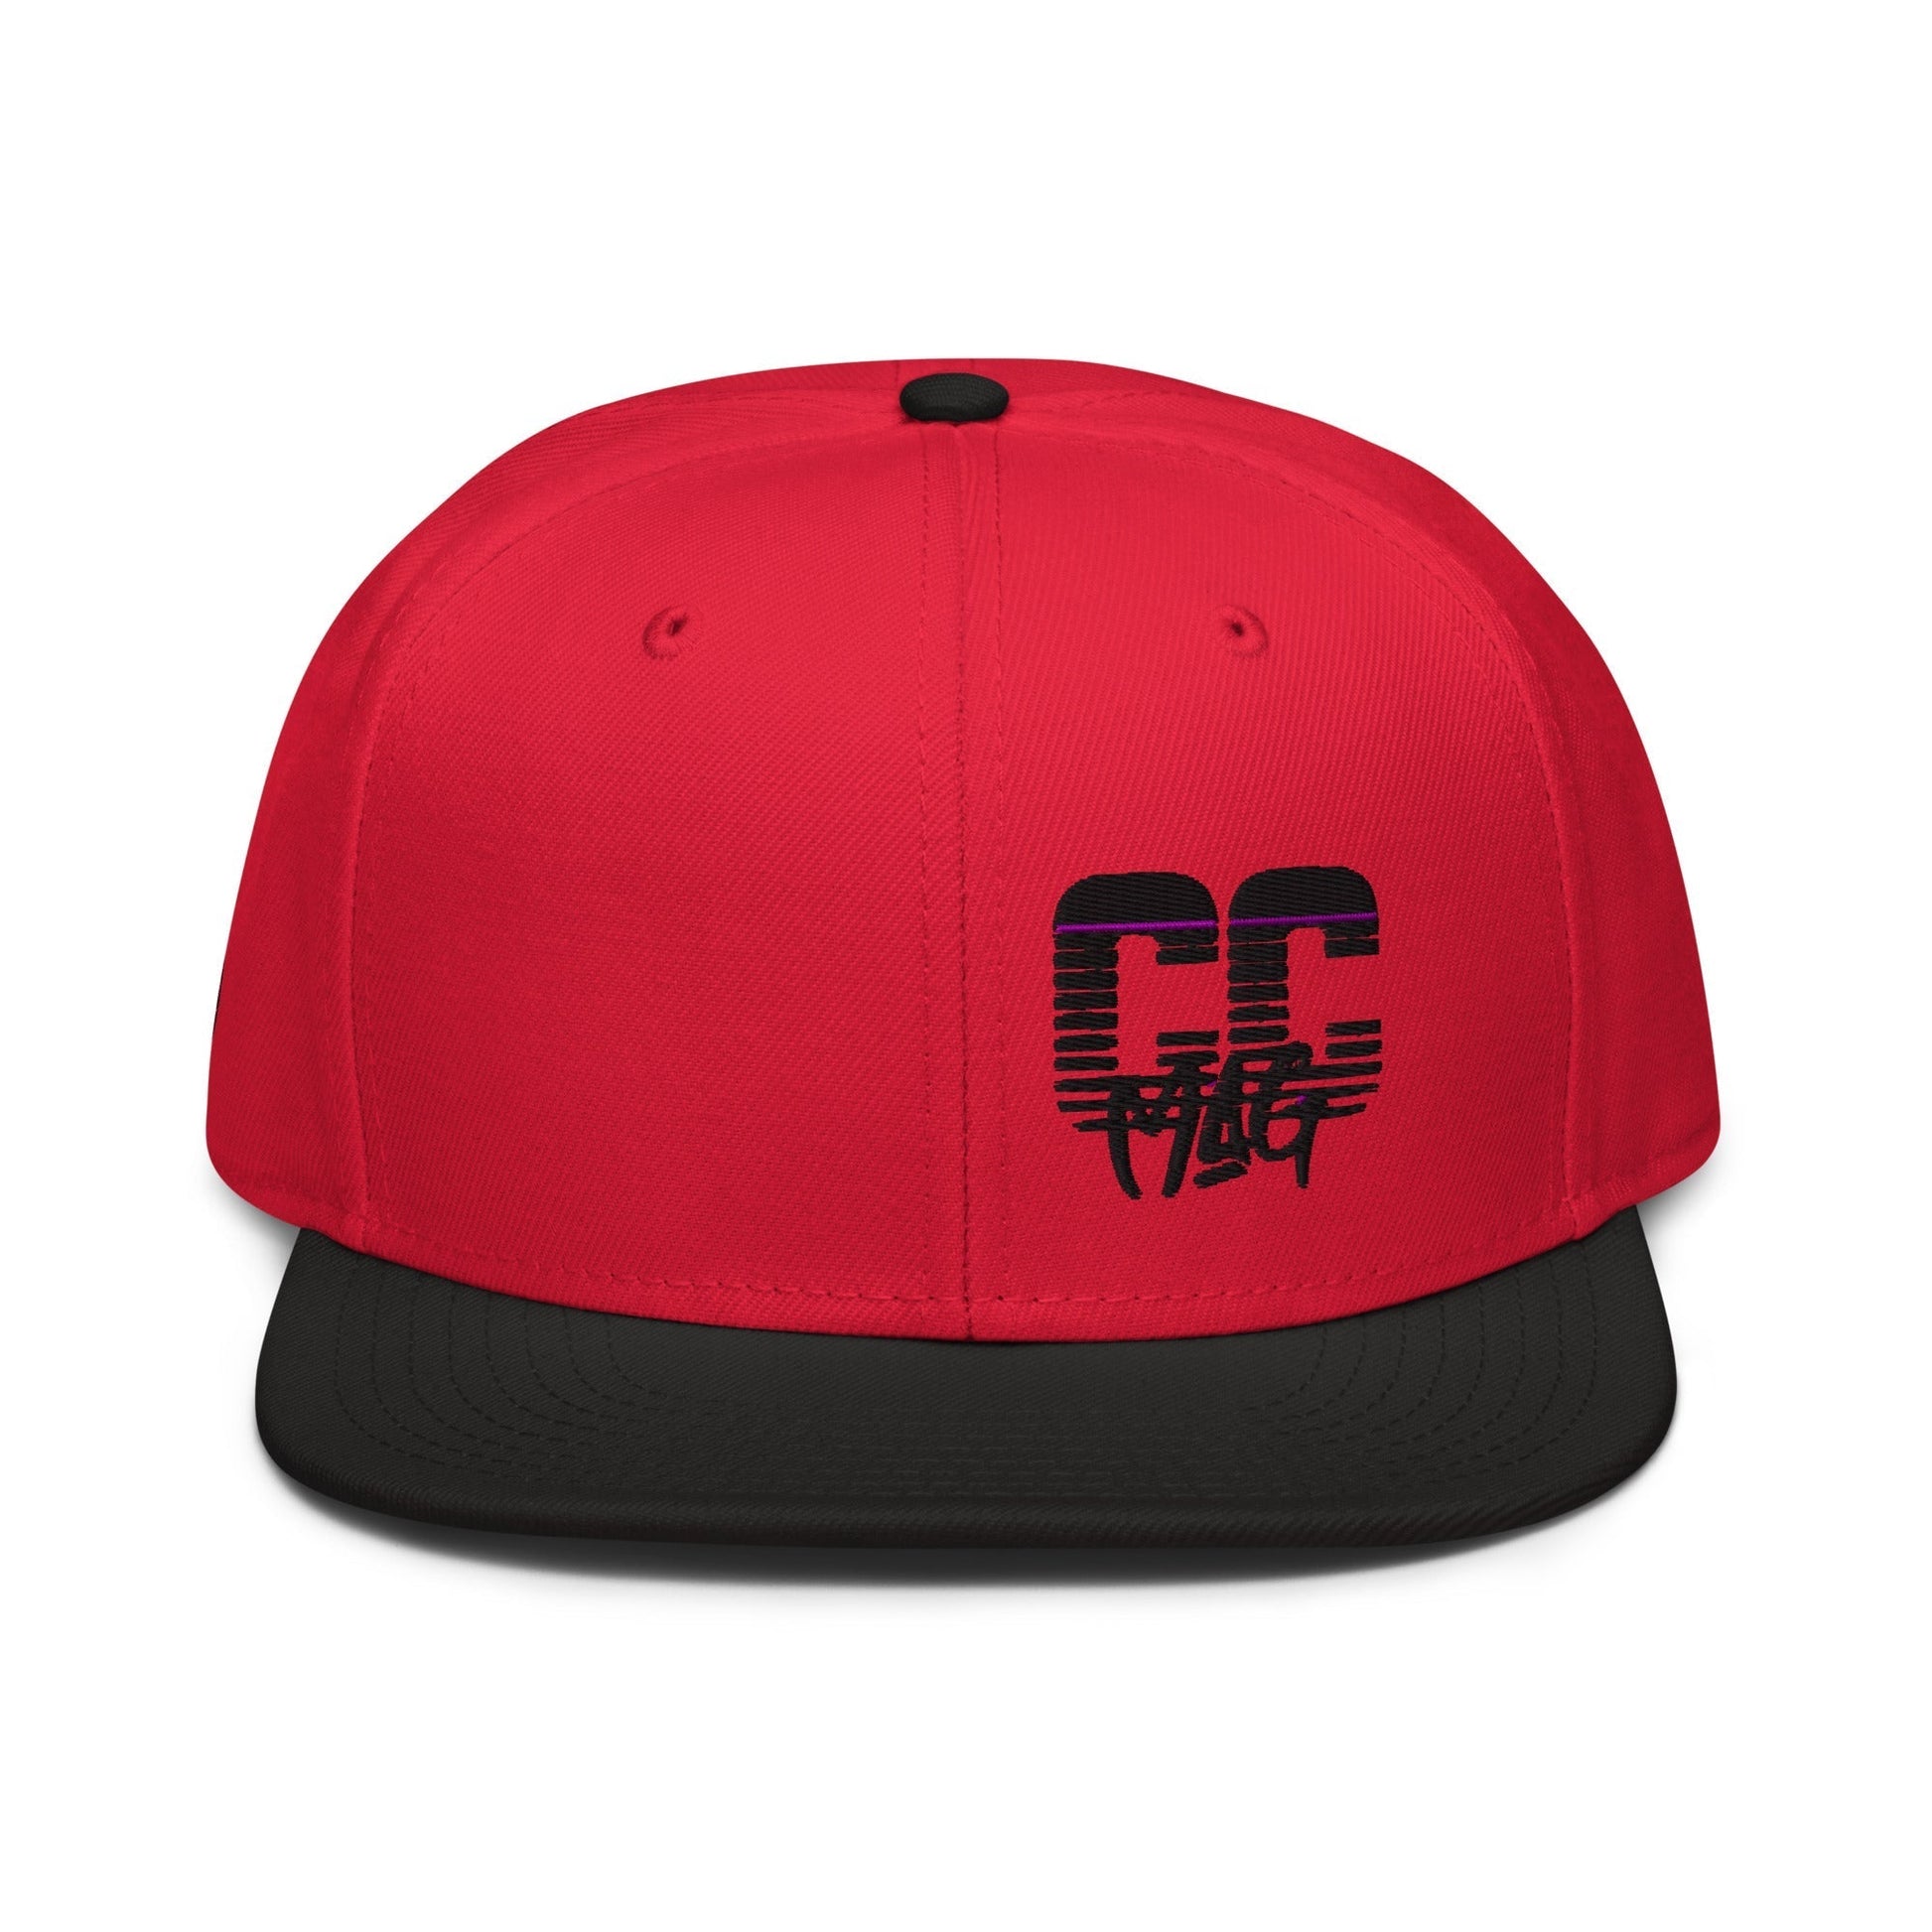 CC Apparel – Mag Culture Logo Cruise Snapback Hat Black